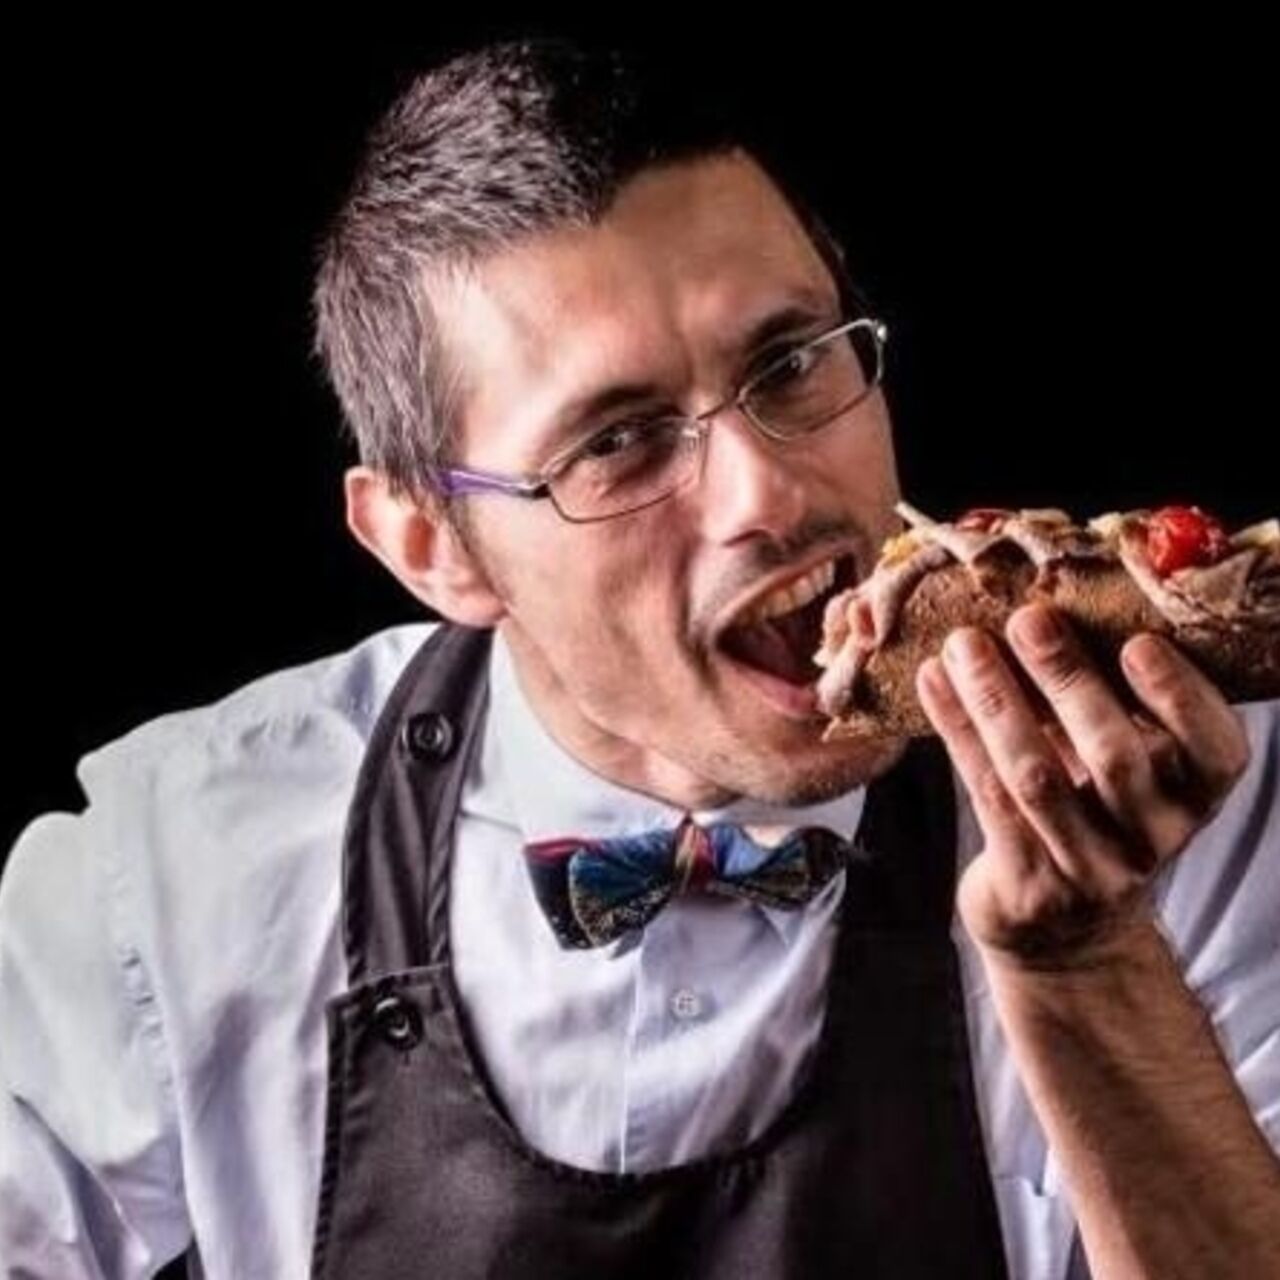 Sándwich gourmet: el chef/no chef de Módena Daniele Reponi del... productor al consumidor